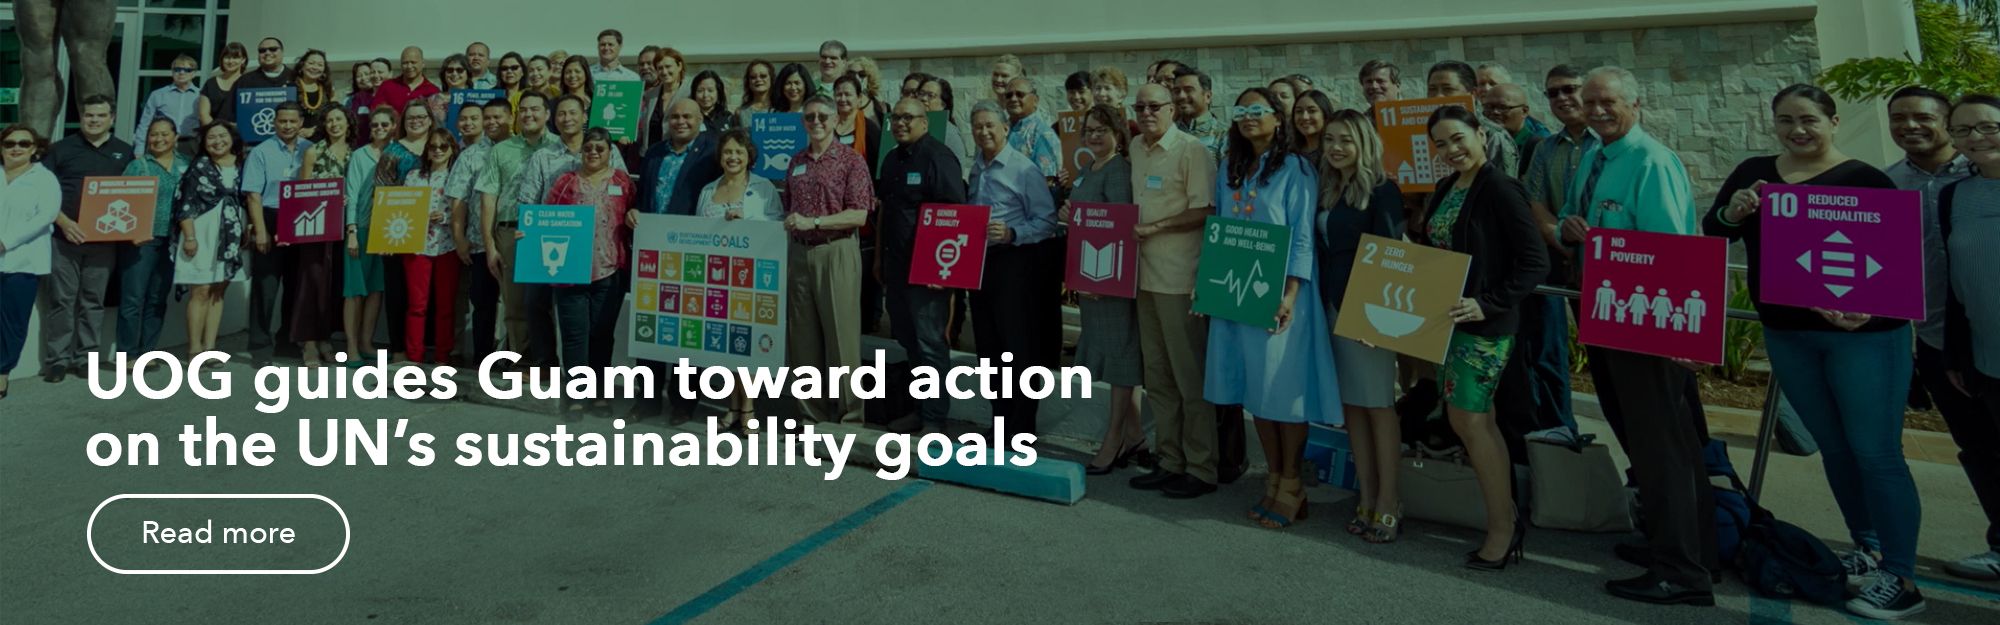 UOG guides Guam toward action on the UN’s sustainability goals